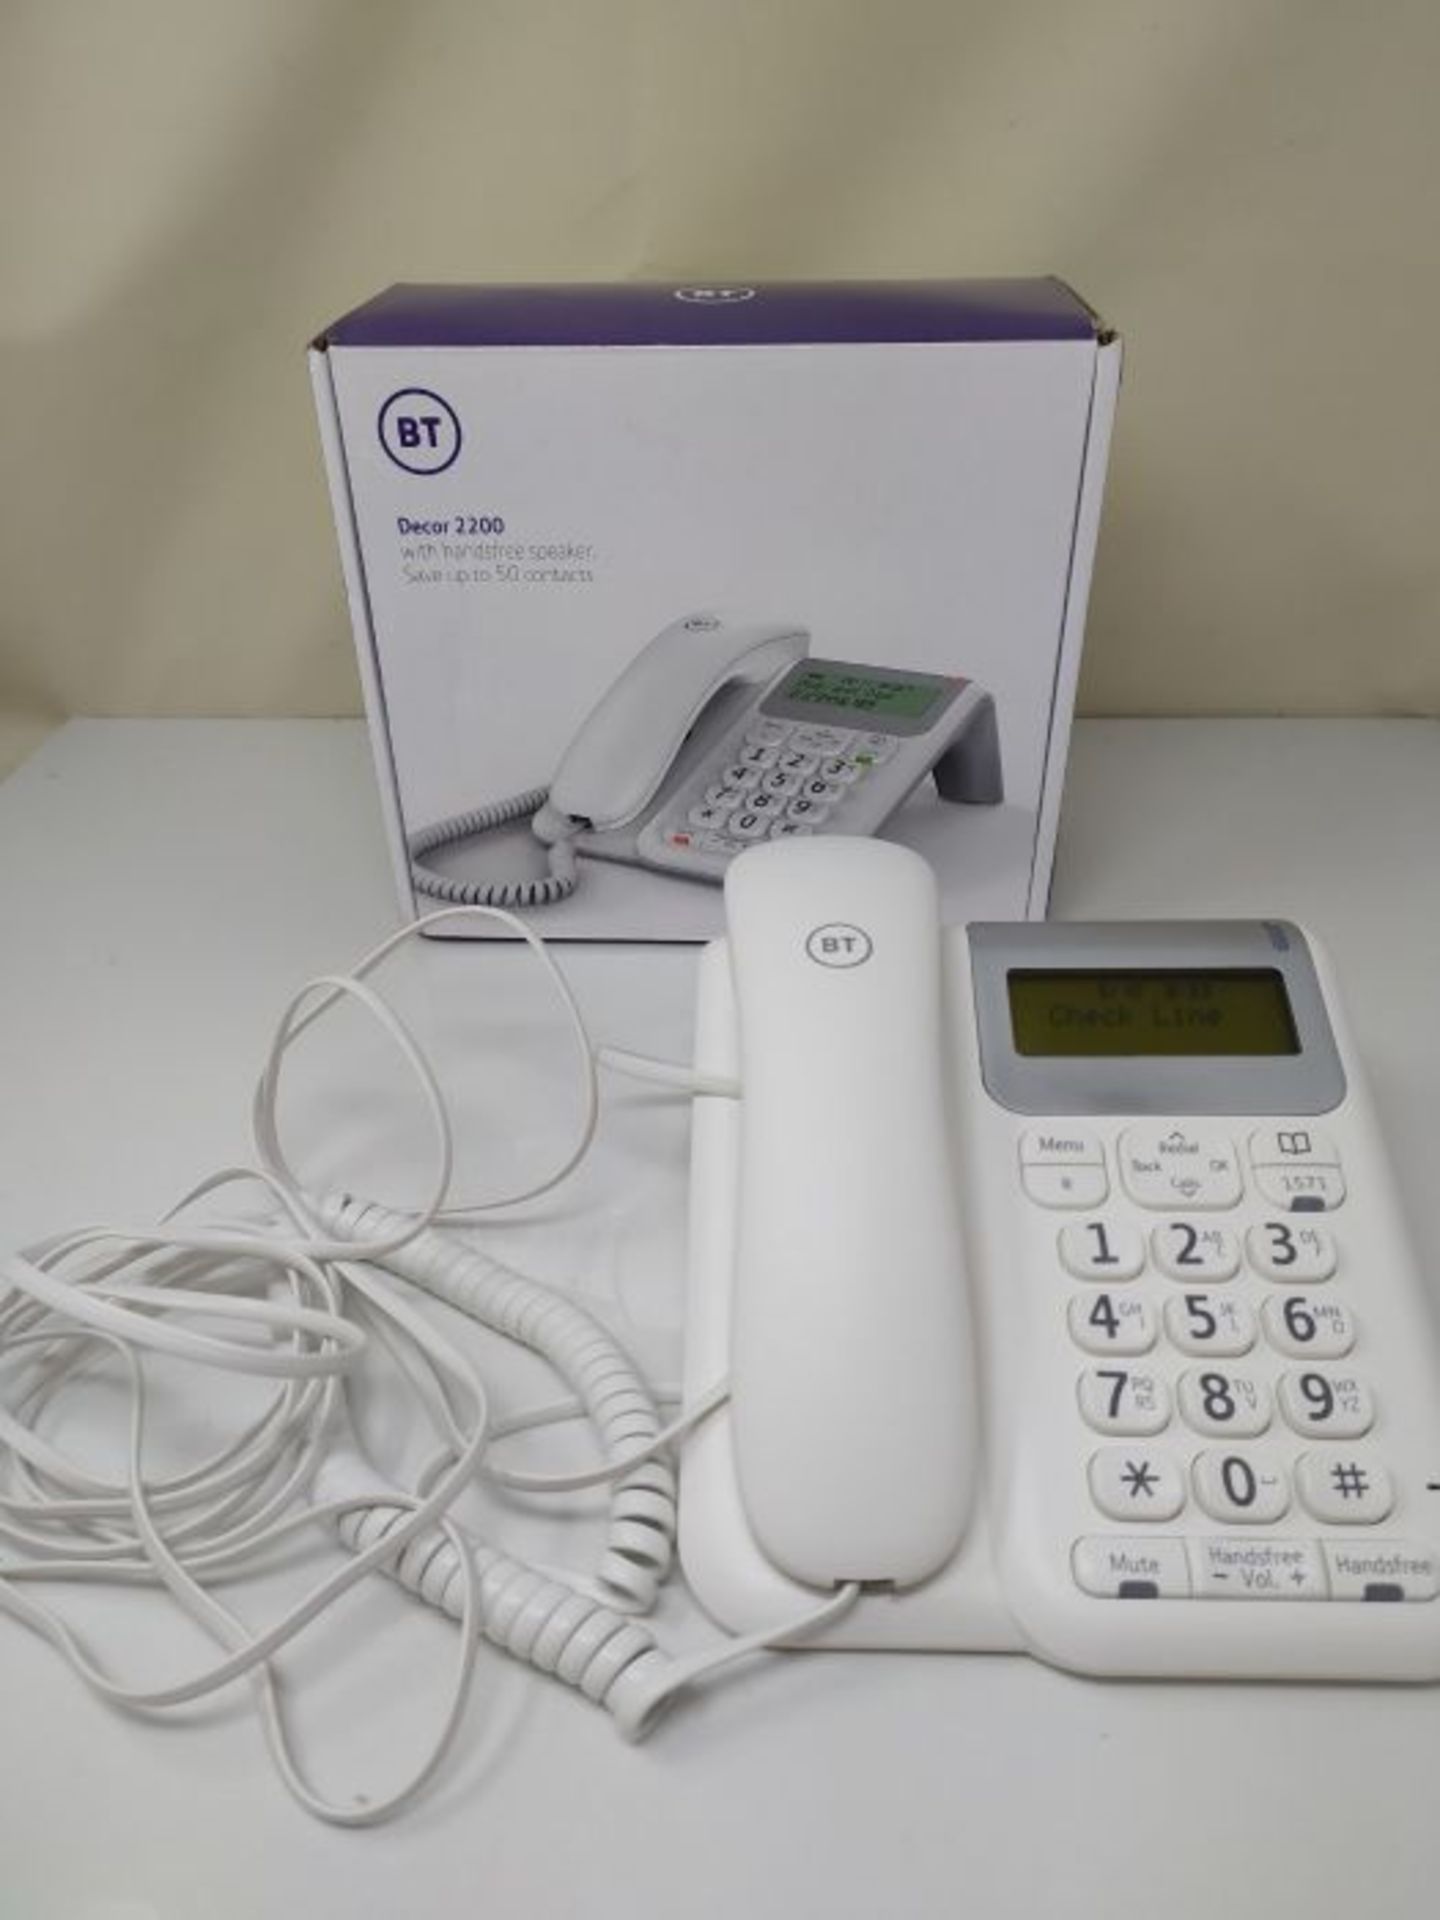 BT Decor Corded Telephone, White - Image 2 of 2